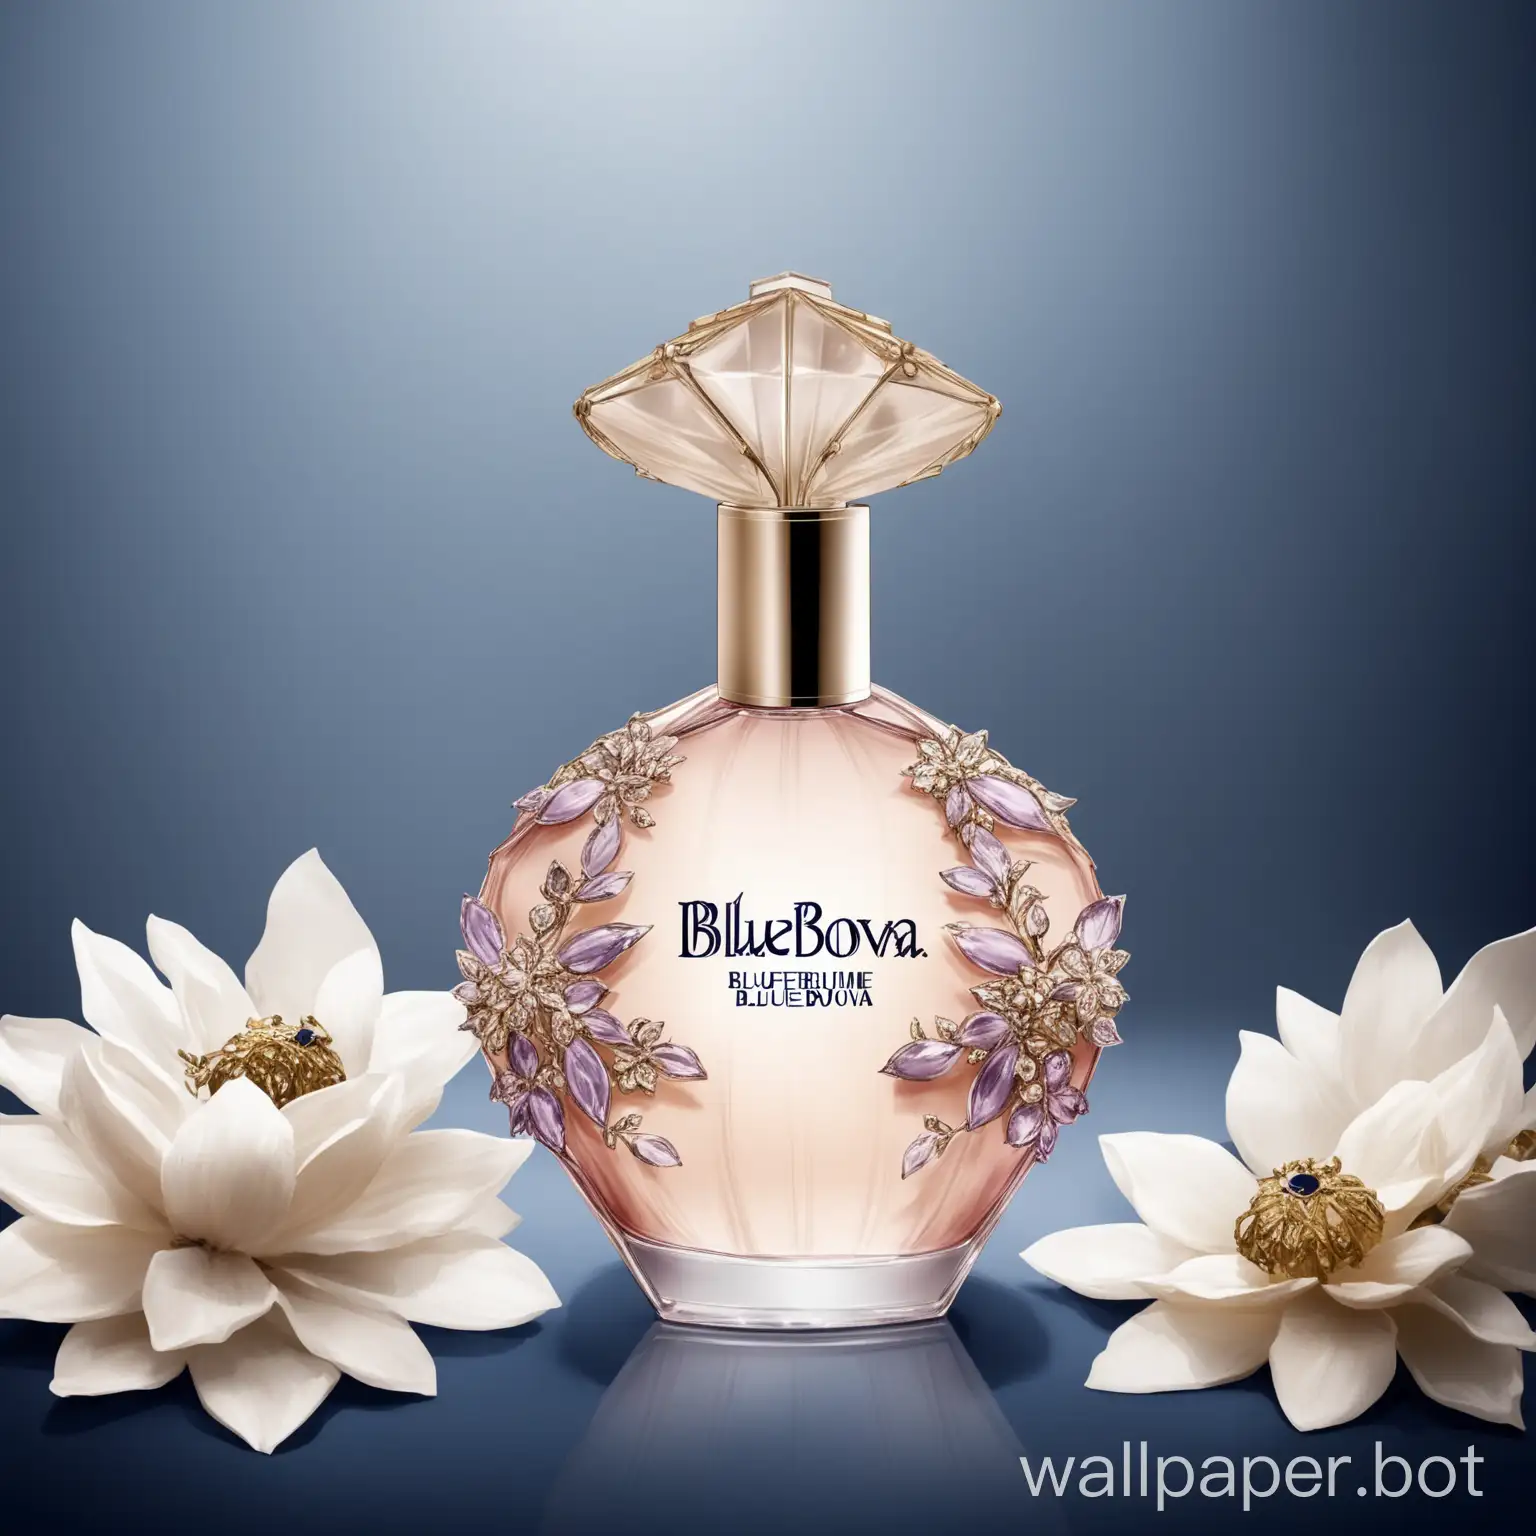 Elegant-Woman-Applying-Blue-Perfume-by-Bluedova